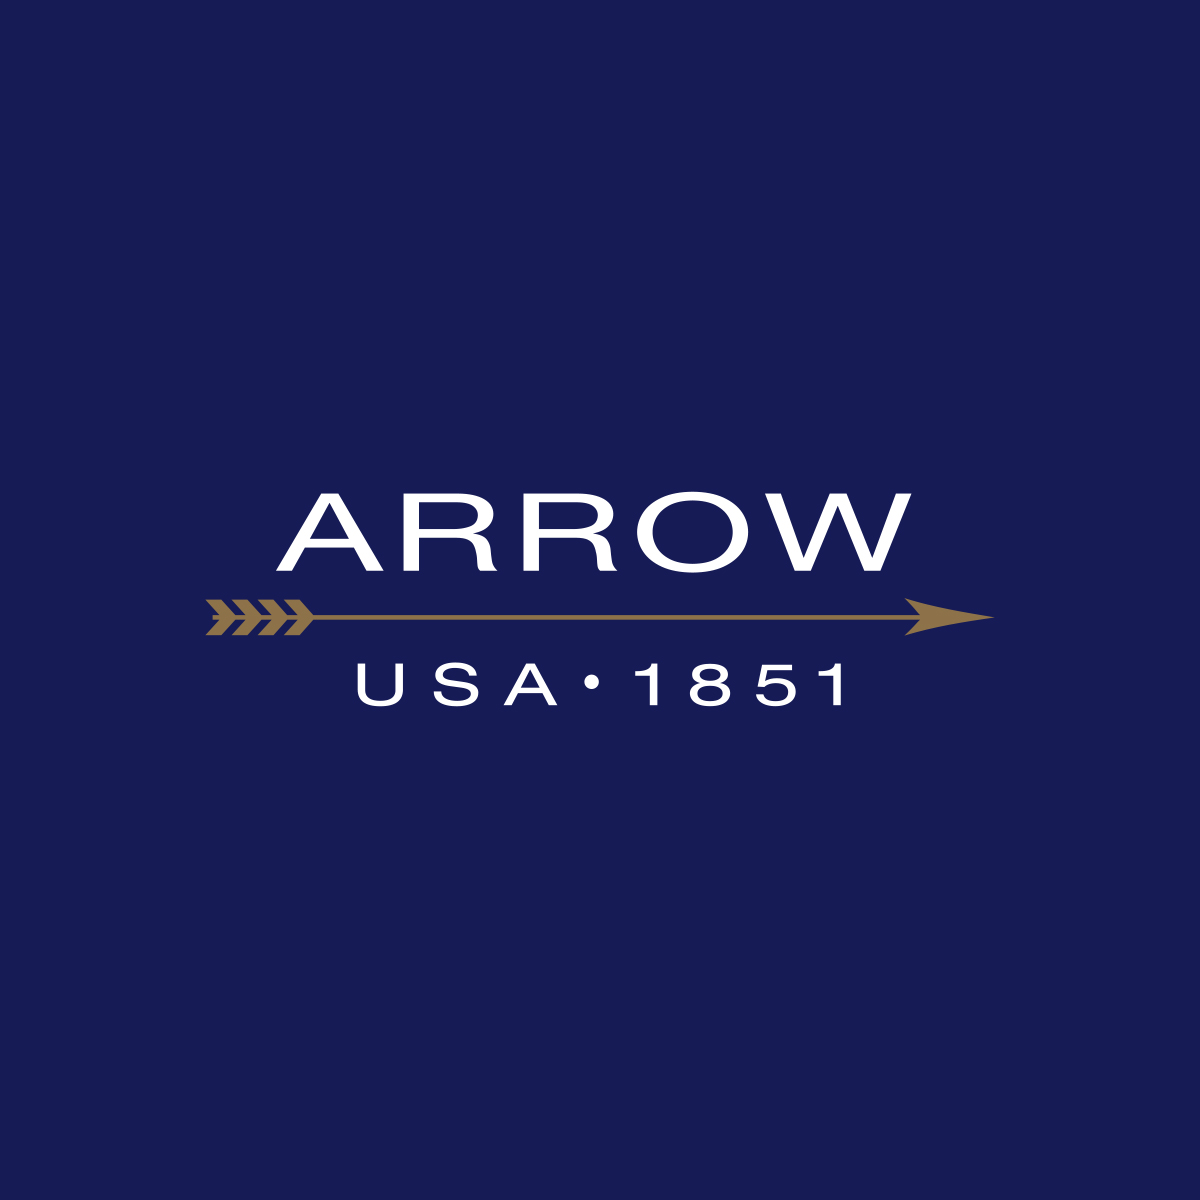 Arrow, Next Galleria Malls